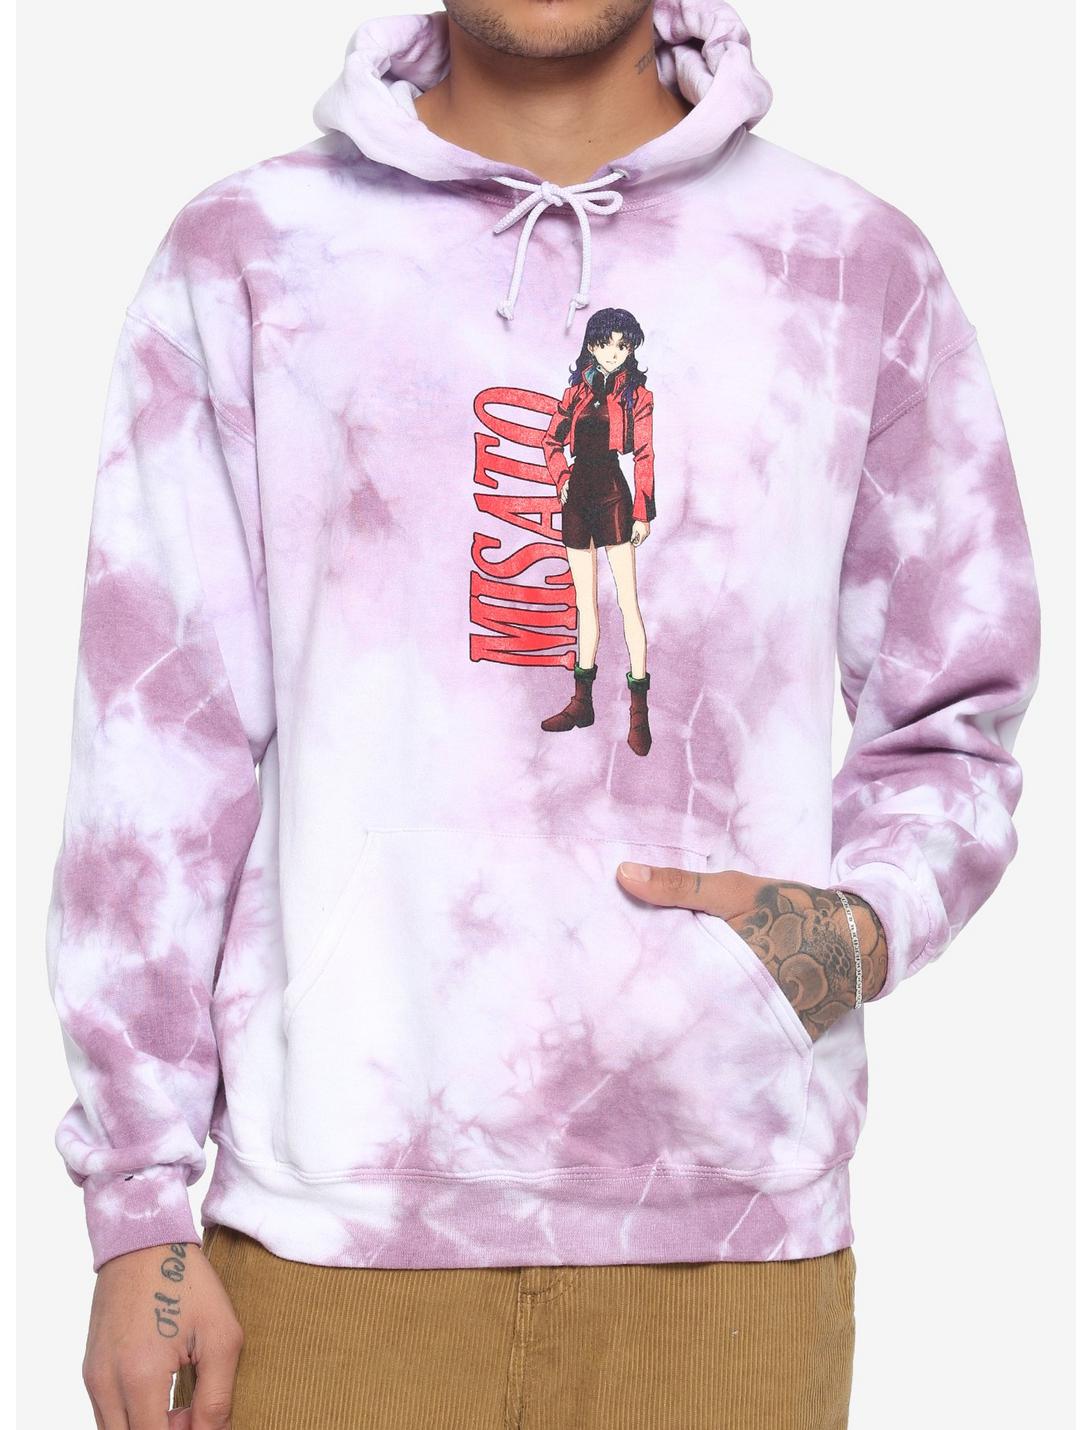 Ki-rby Pla-net Ro-bob-ot Pink Mens Hooded Sweatshirt Comfort with Kangaroo Pocket